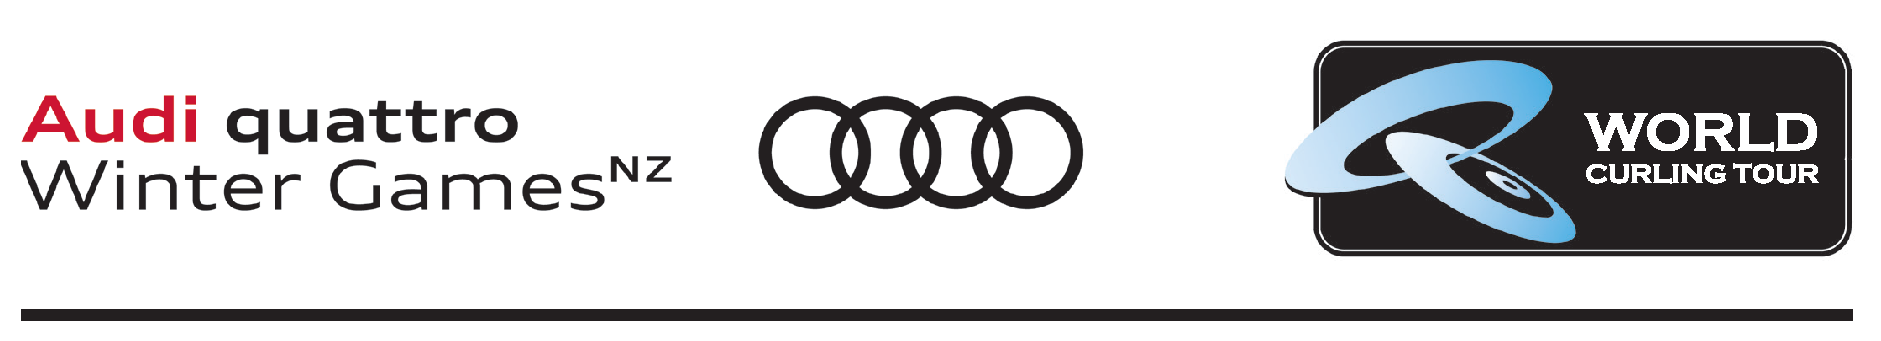 Audi quattro Winter Games NZ logo